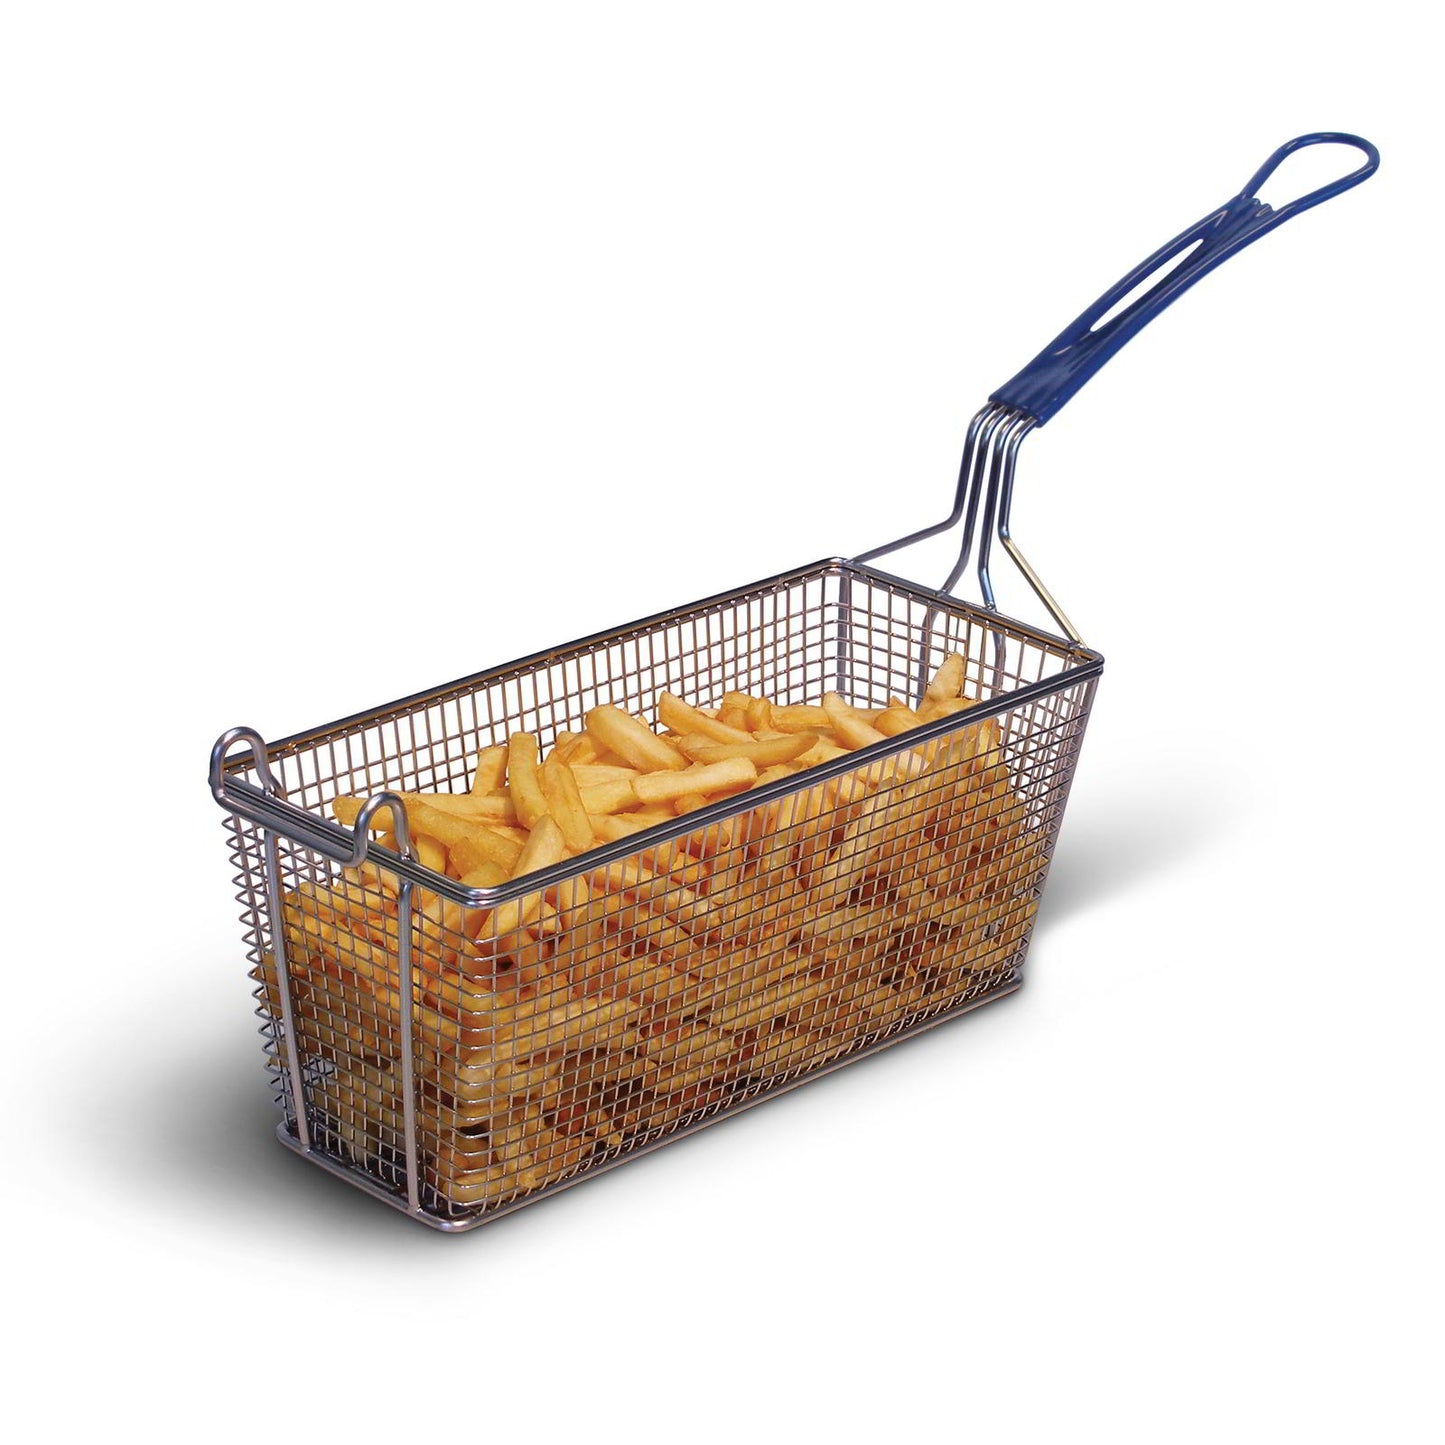 Austheat Freestanding Electric Fryer rapid recovery, 2 baskets